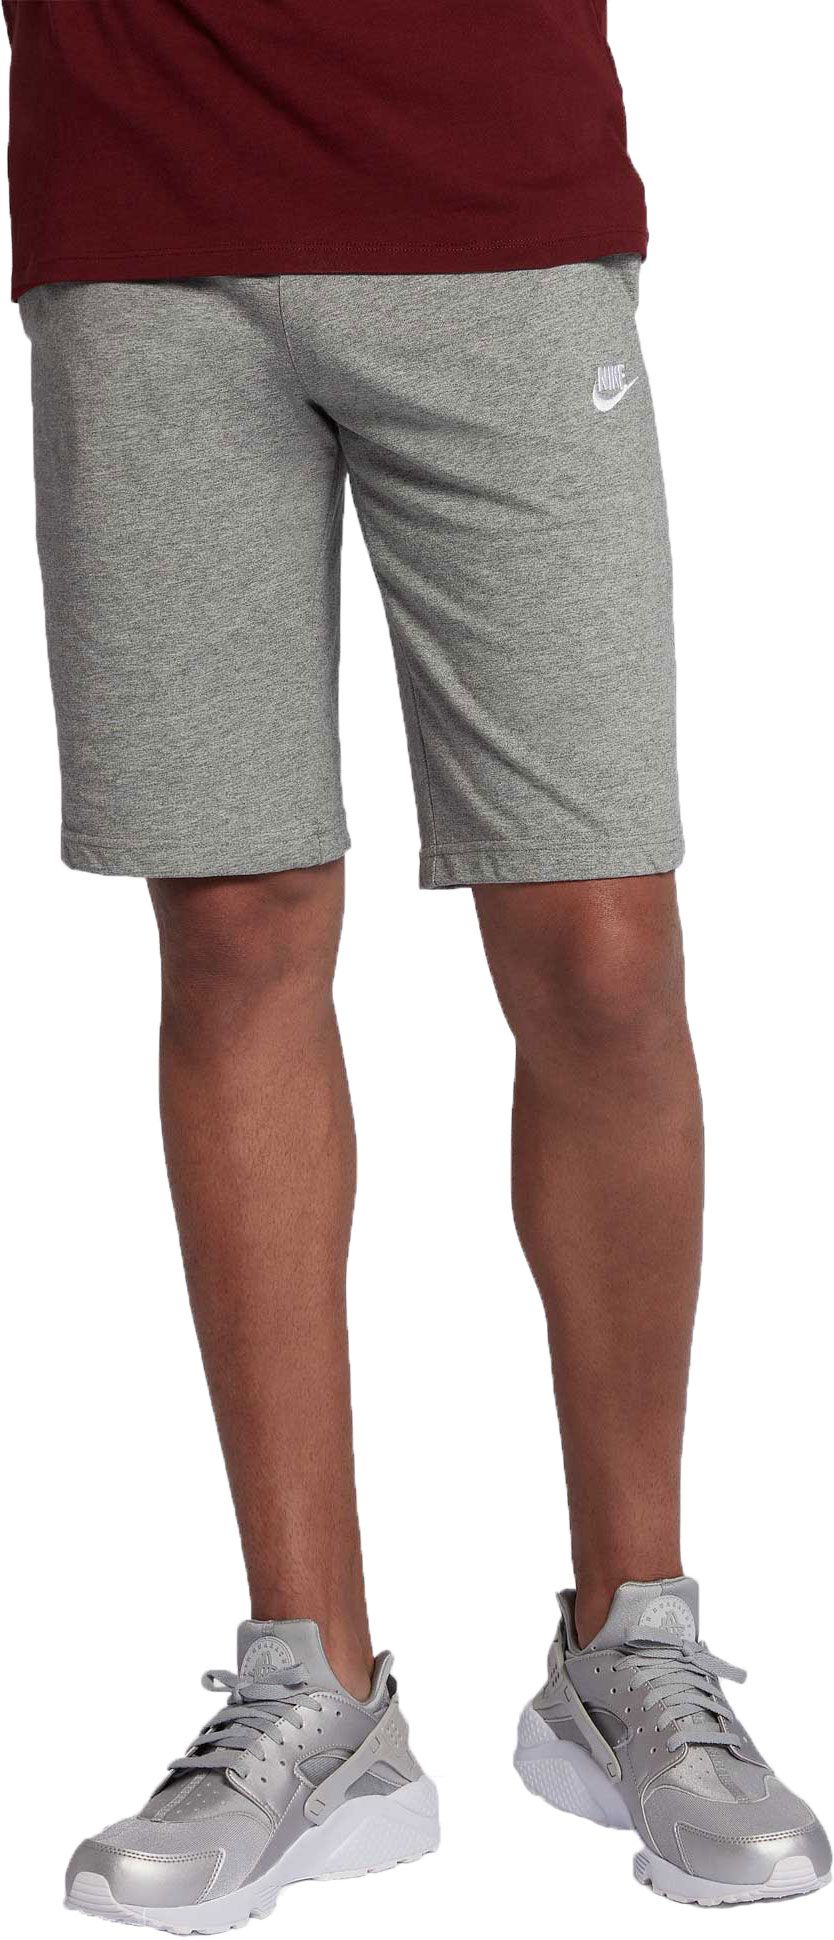 nike jersey shorts in grey